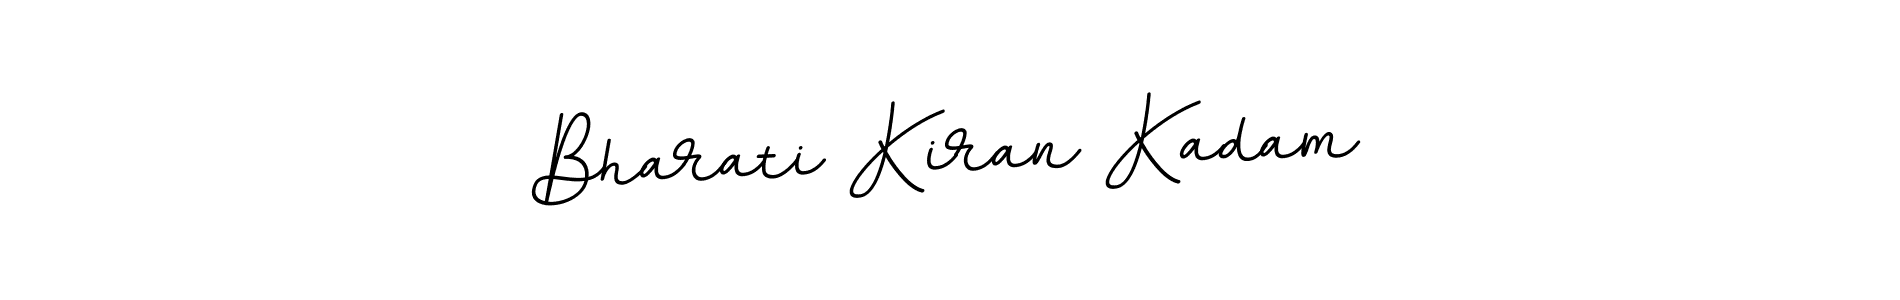 How to Draw Bharati Kiran Kadam signature style? BallpointsItalic-DORy9 is a latest design signature styles for name Bharati Kiran Kadam. Bharati Kiran Kadam signature style 11 images and pictures png